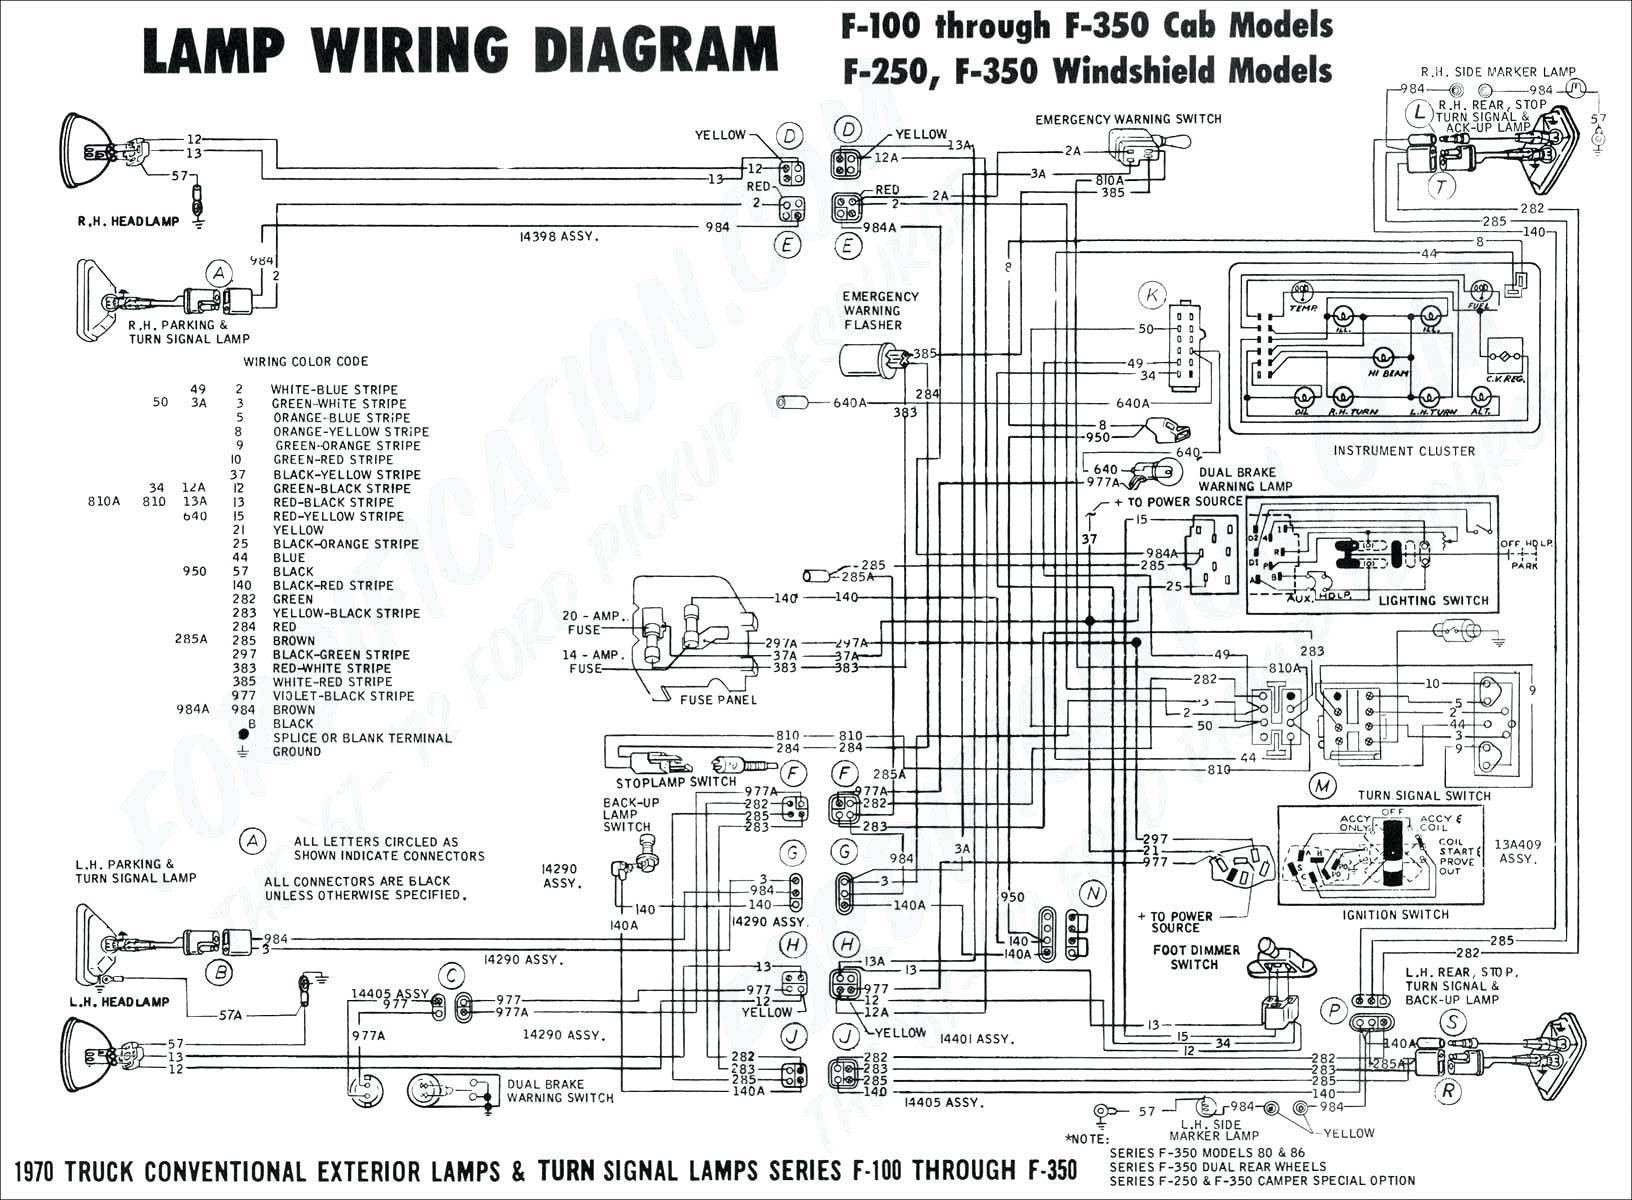 Ecm Motor Wiring Diagram Rate Ecm Relay Wiring Diagram Inspirationa Wiring Diagram Fuel Pump Relay